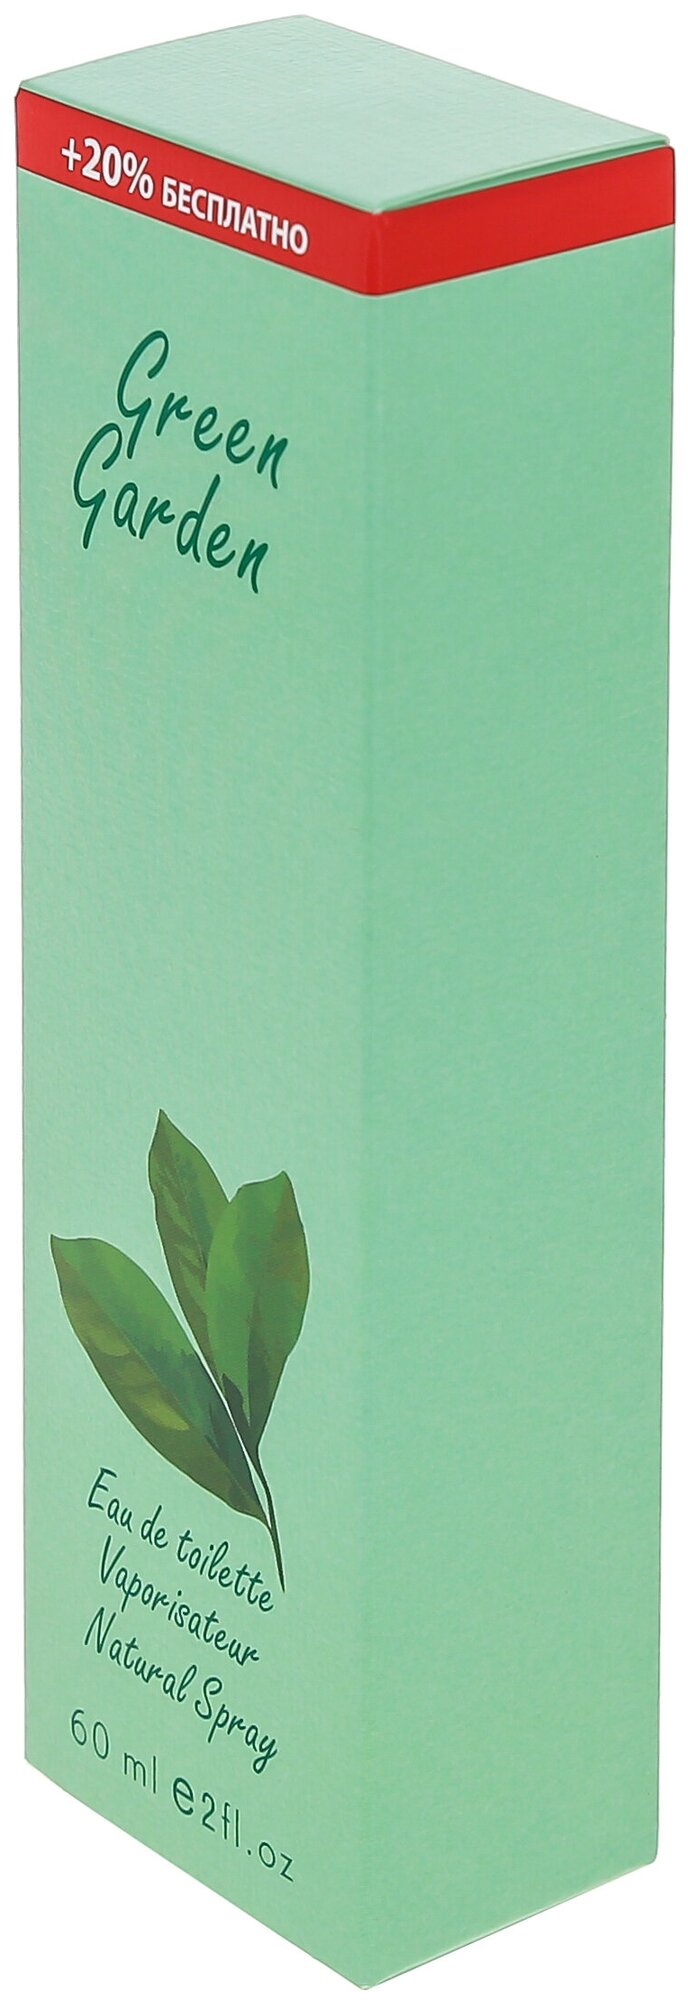 КПК-парфюм Туалетная вода женская GREEN GARDEN, 60мл